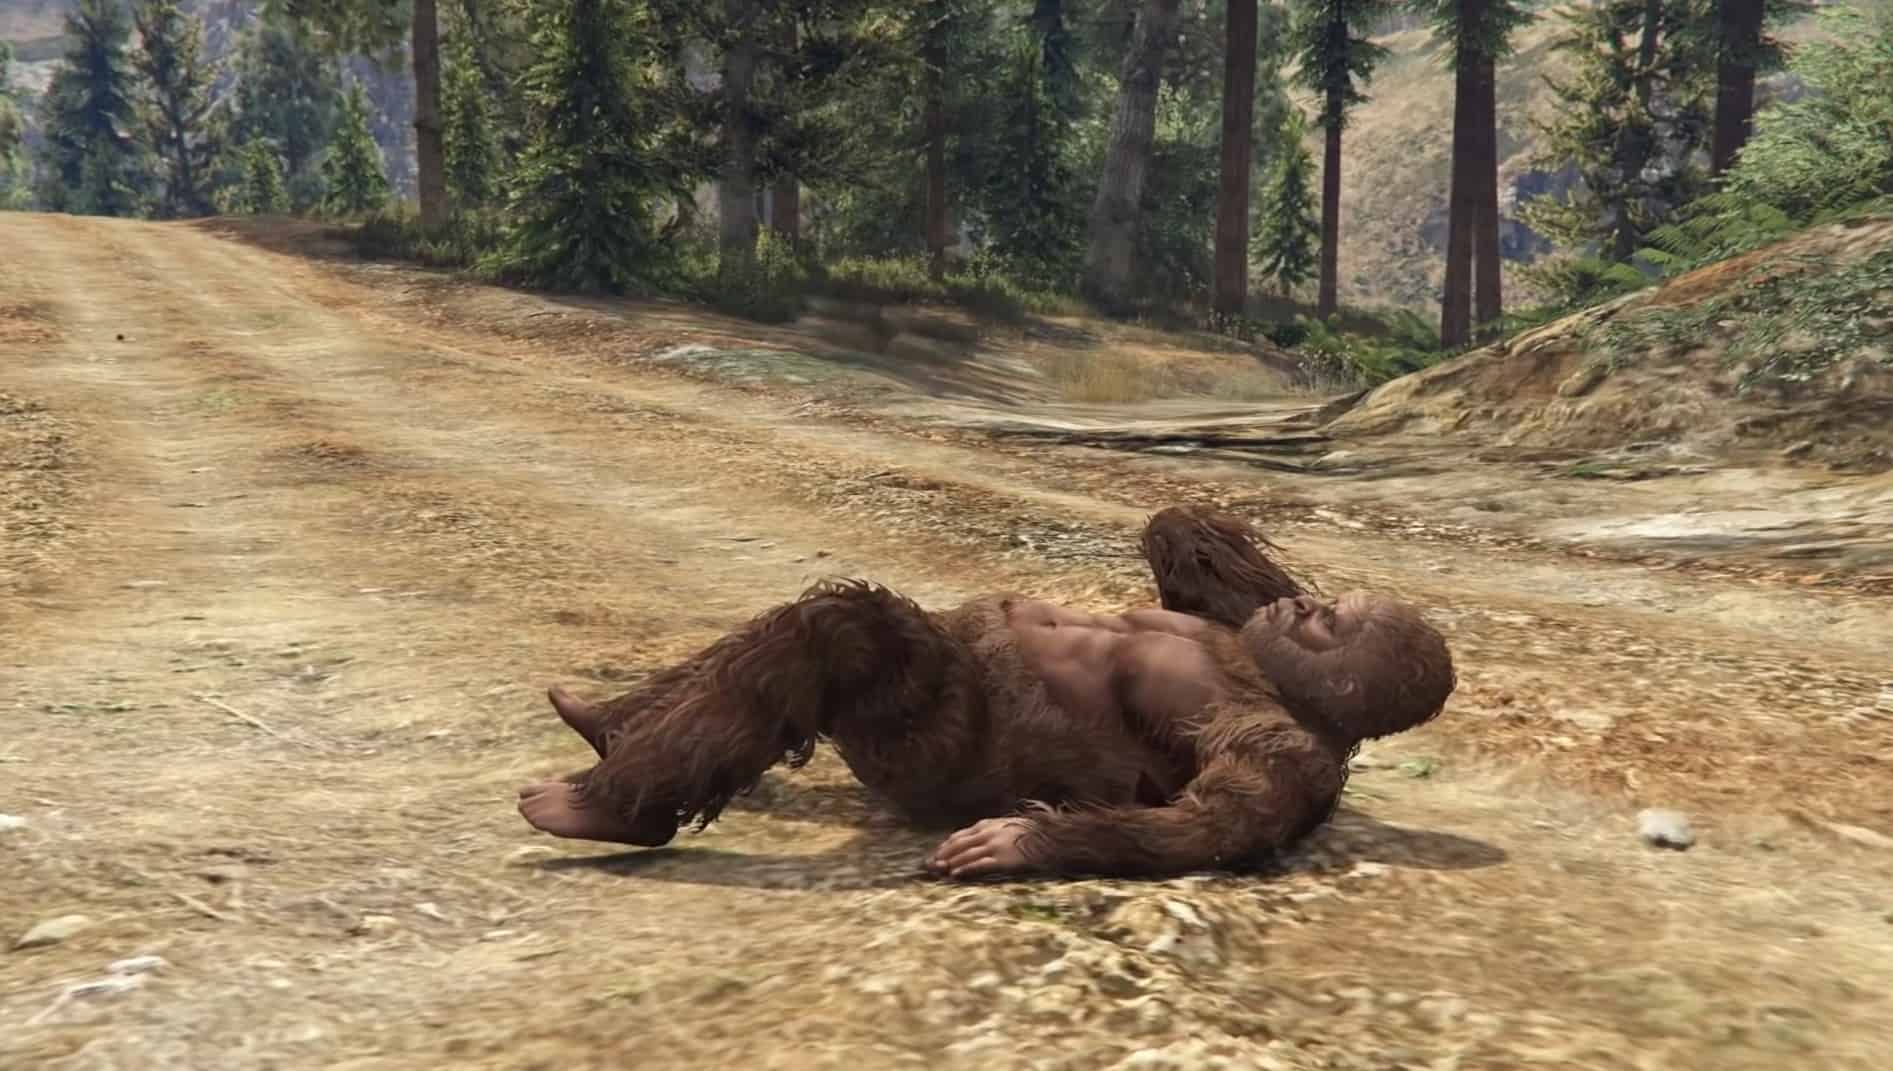 Finding Bigfoot, Part 2